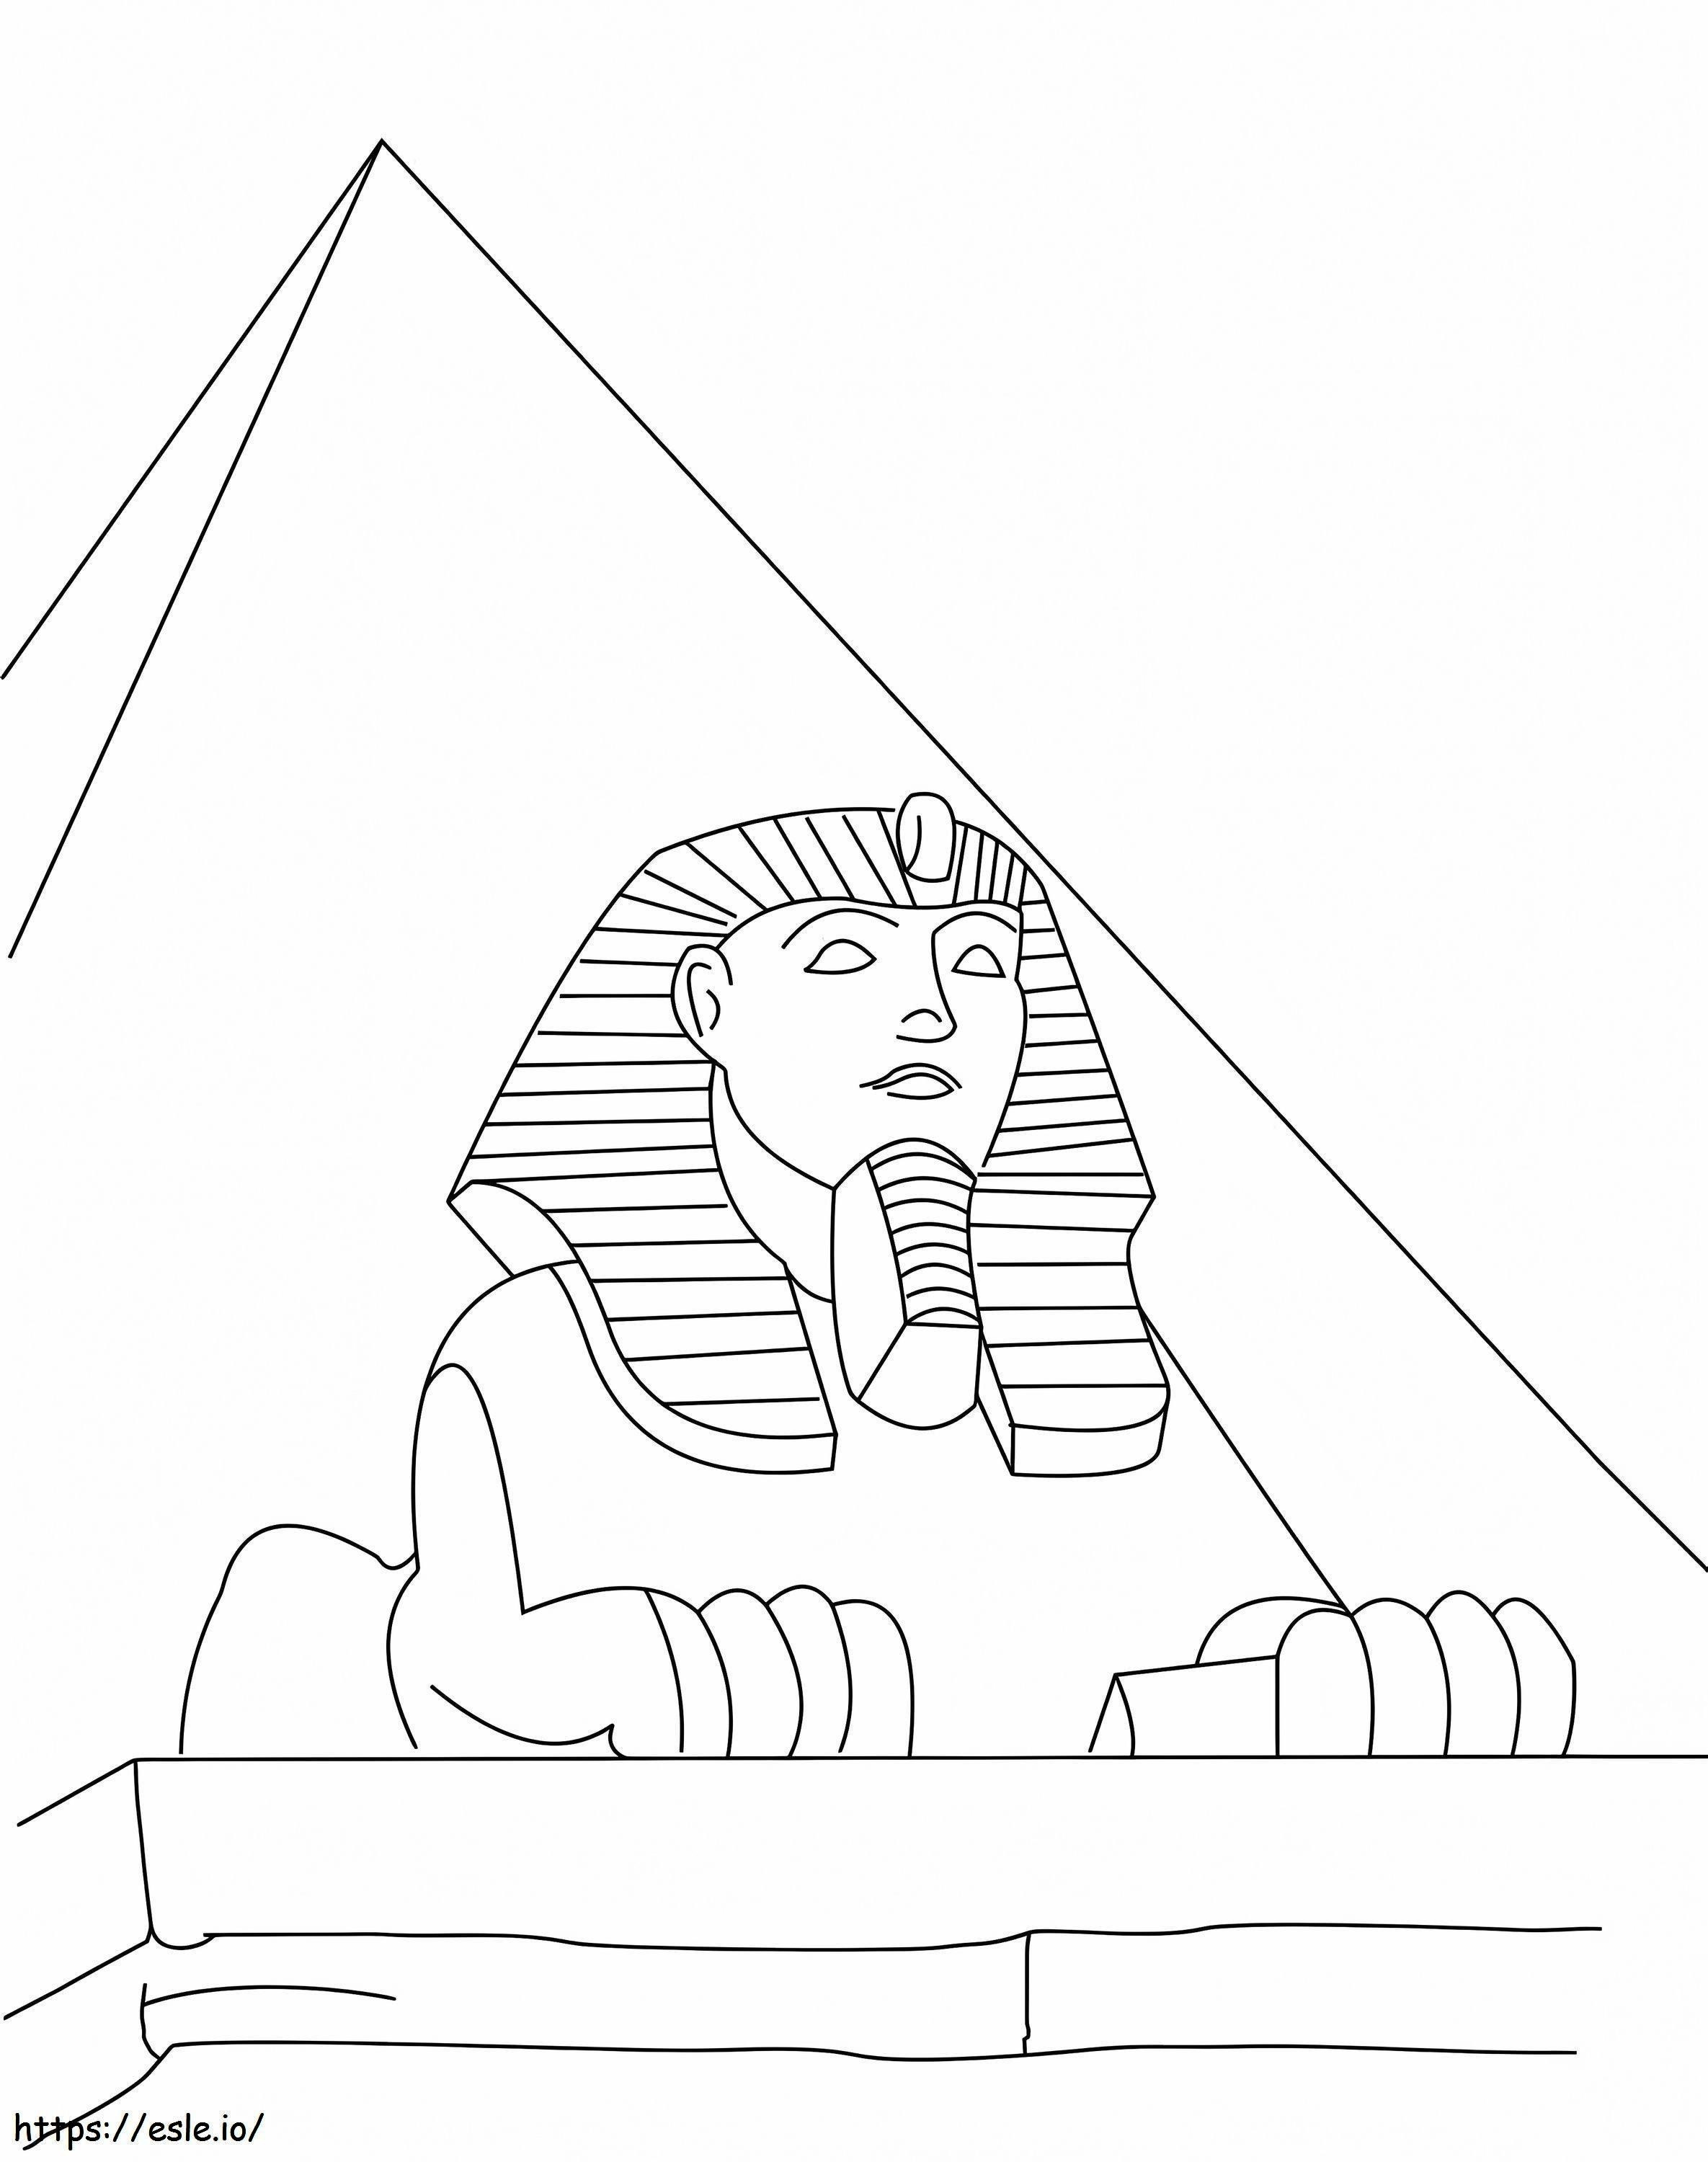 1542941189 3350 29315 Sphinks Egyiptom kifestő